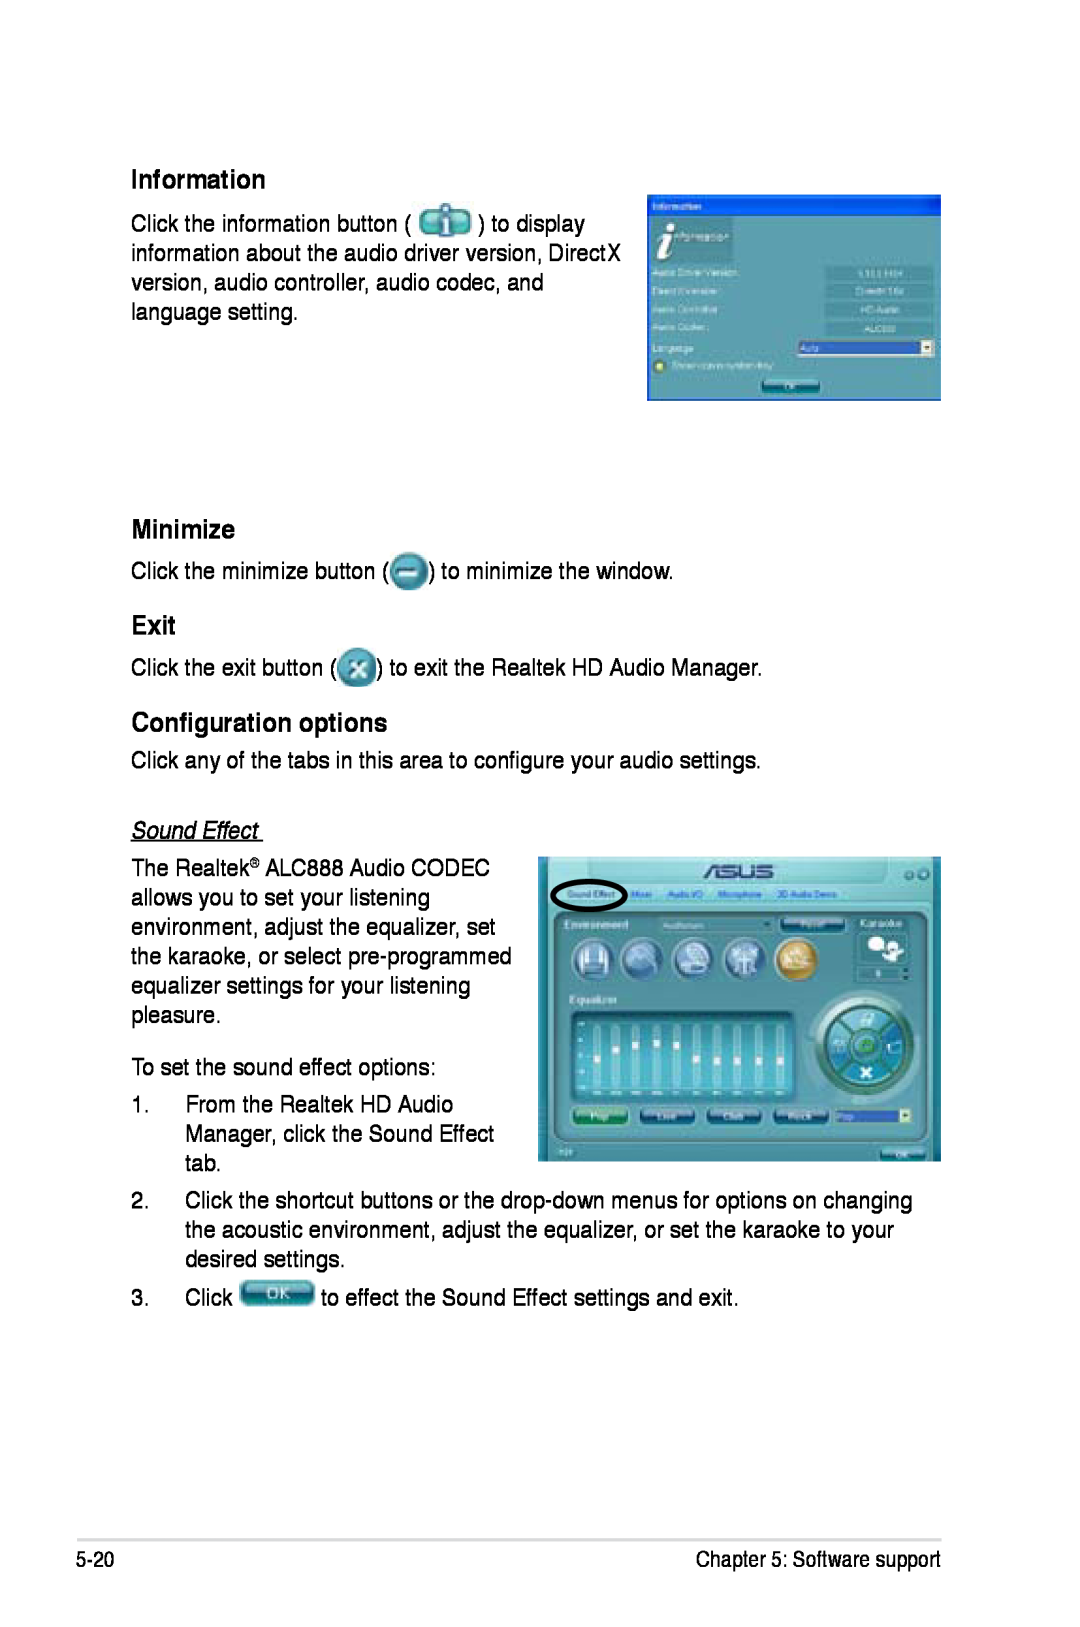 Asus Z7S WS manual Information, Minimize, Exit, Configuration options, Sound Effect 